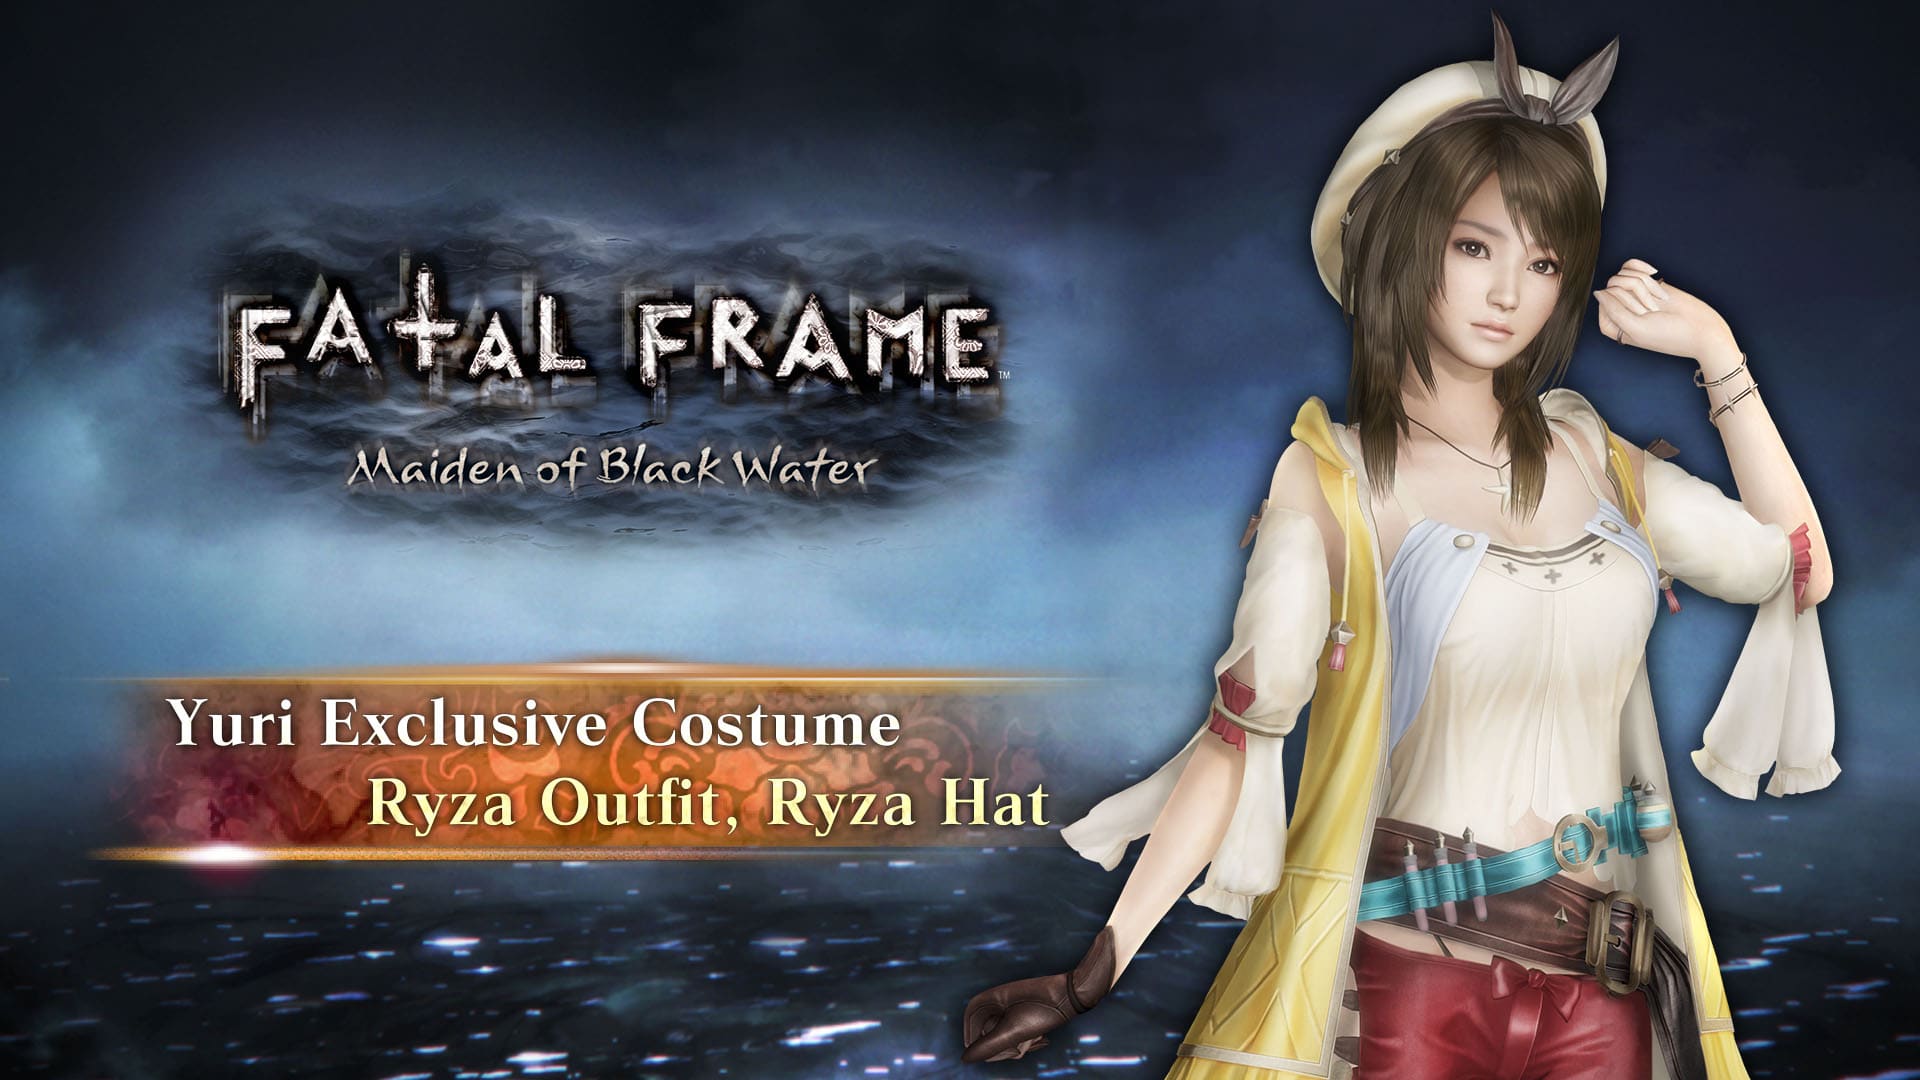 Yuri Exclusive Costume: Ryza Outfit, Ryza Hat